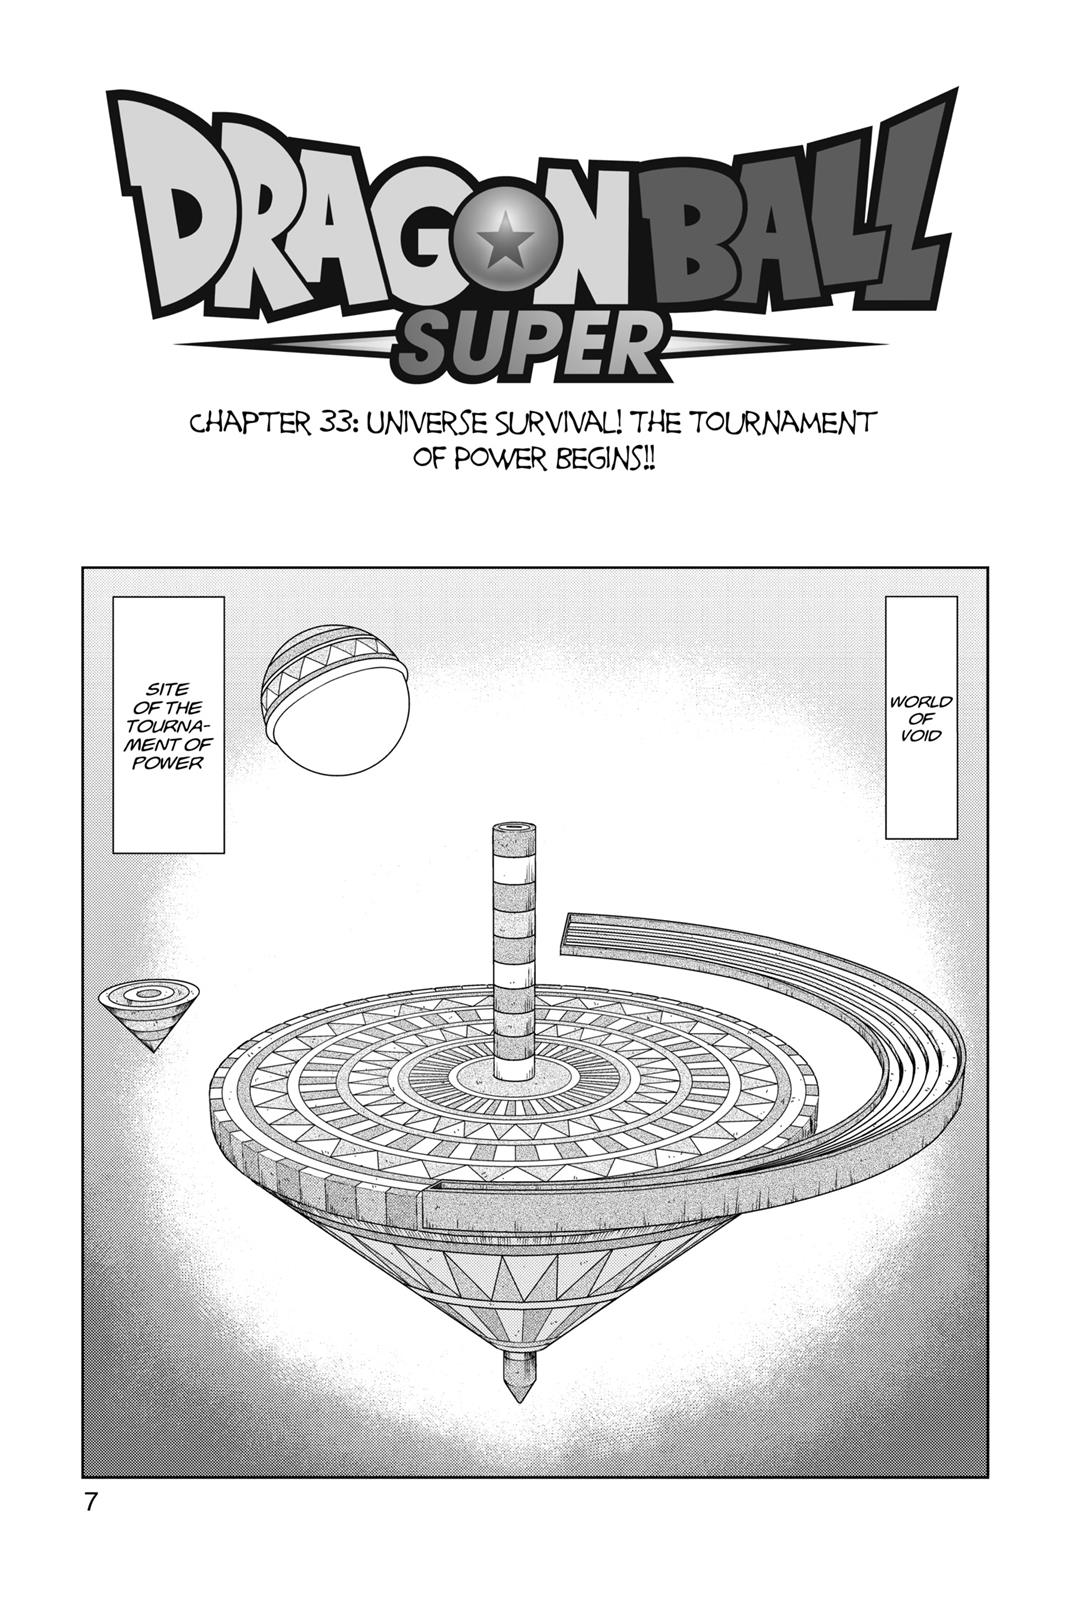 Tournament Of Power Manga, Dragon Ball